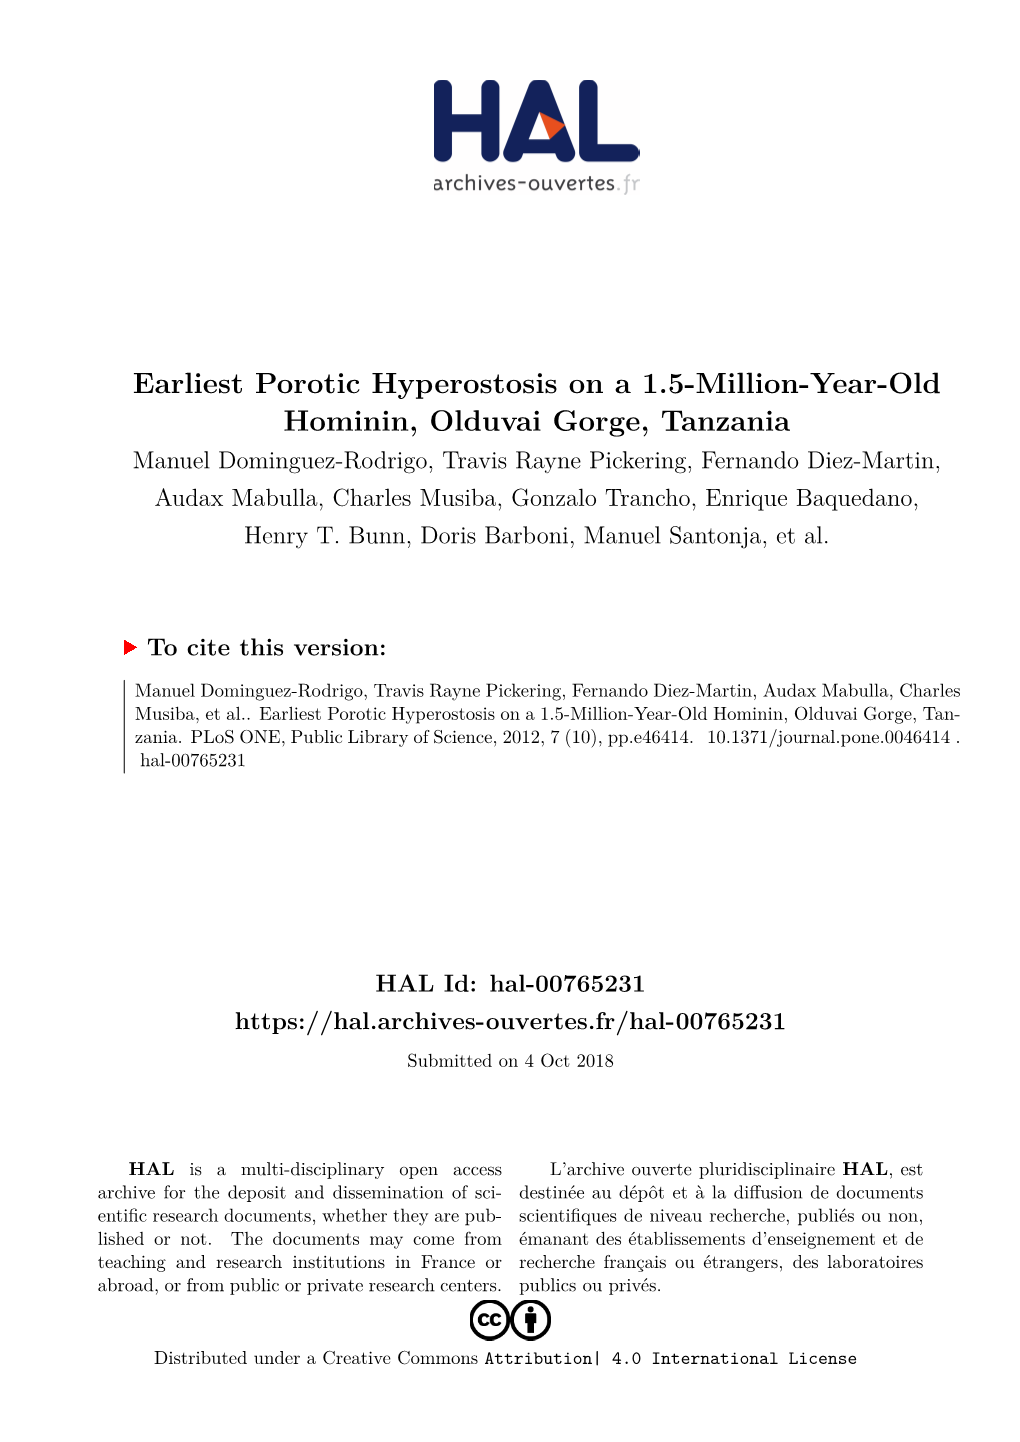 Earliest Porotic Hyperostosis on a 1.5-Million